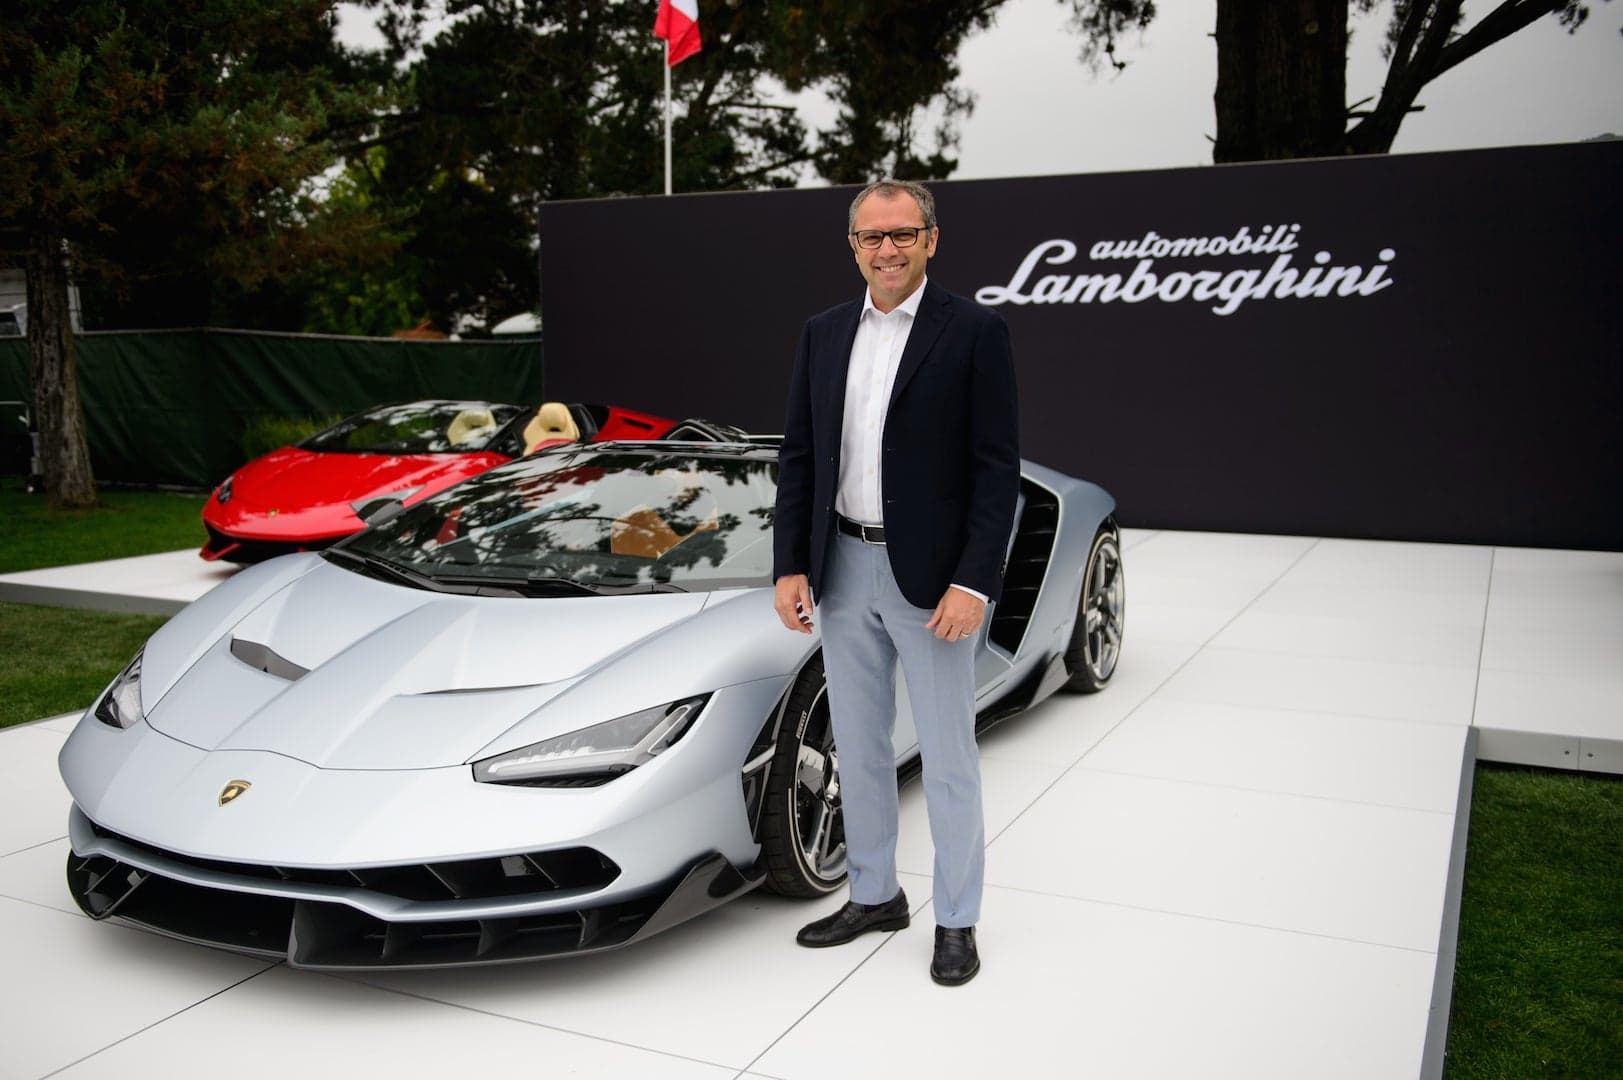 Lamborghini Must Be Humble, Says CEO Stefano Domenicali